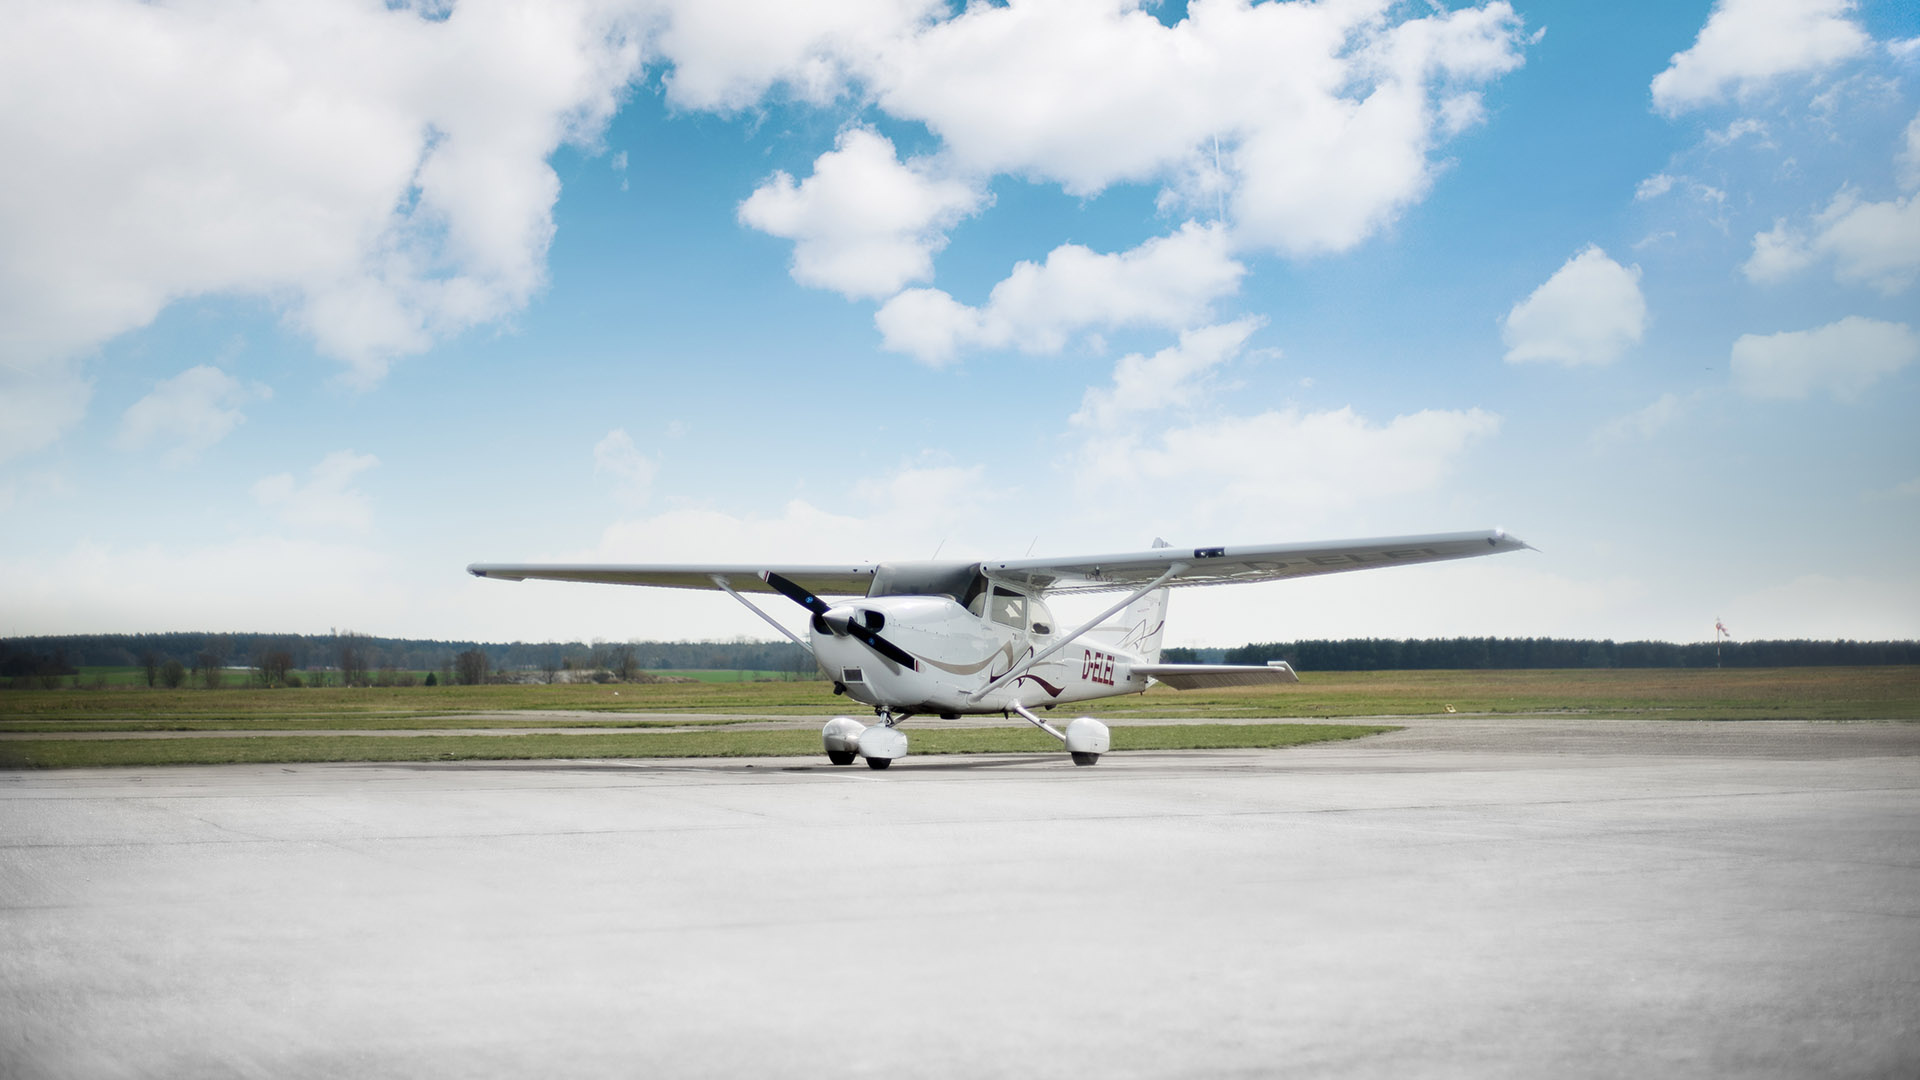 Reims-Cessna, Airplane adventure, Sky-high views, Travel destinations, 1920x1080 Full HD Desktop